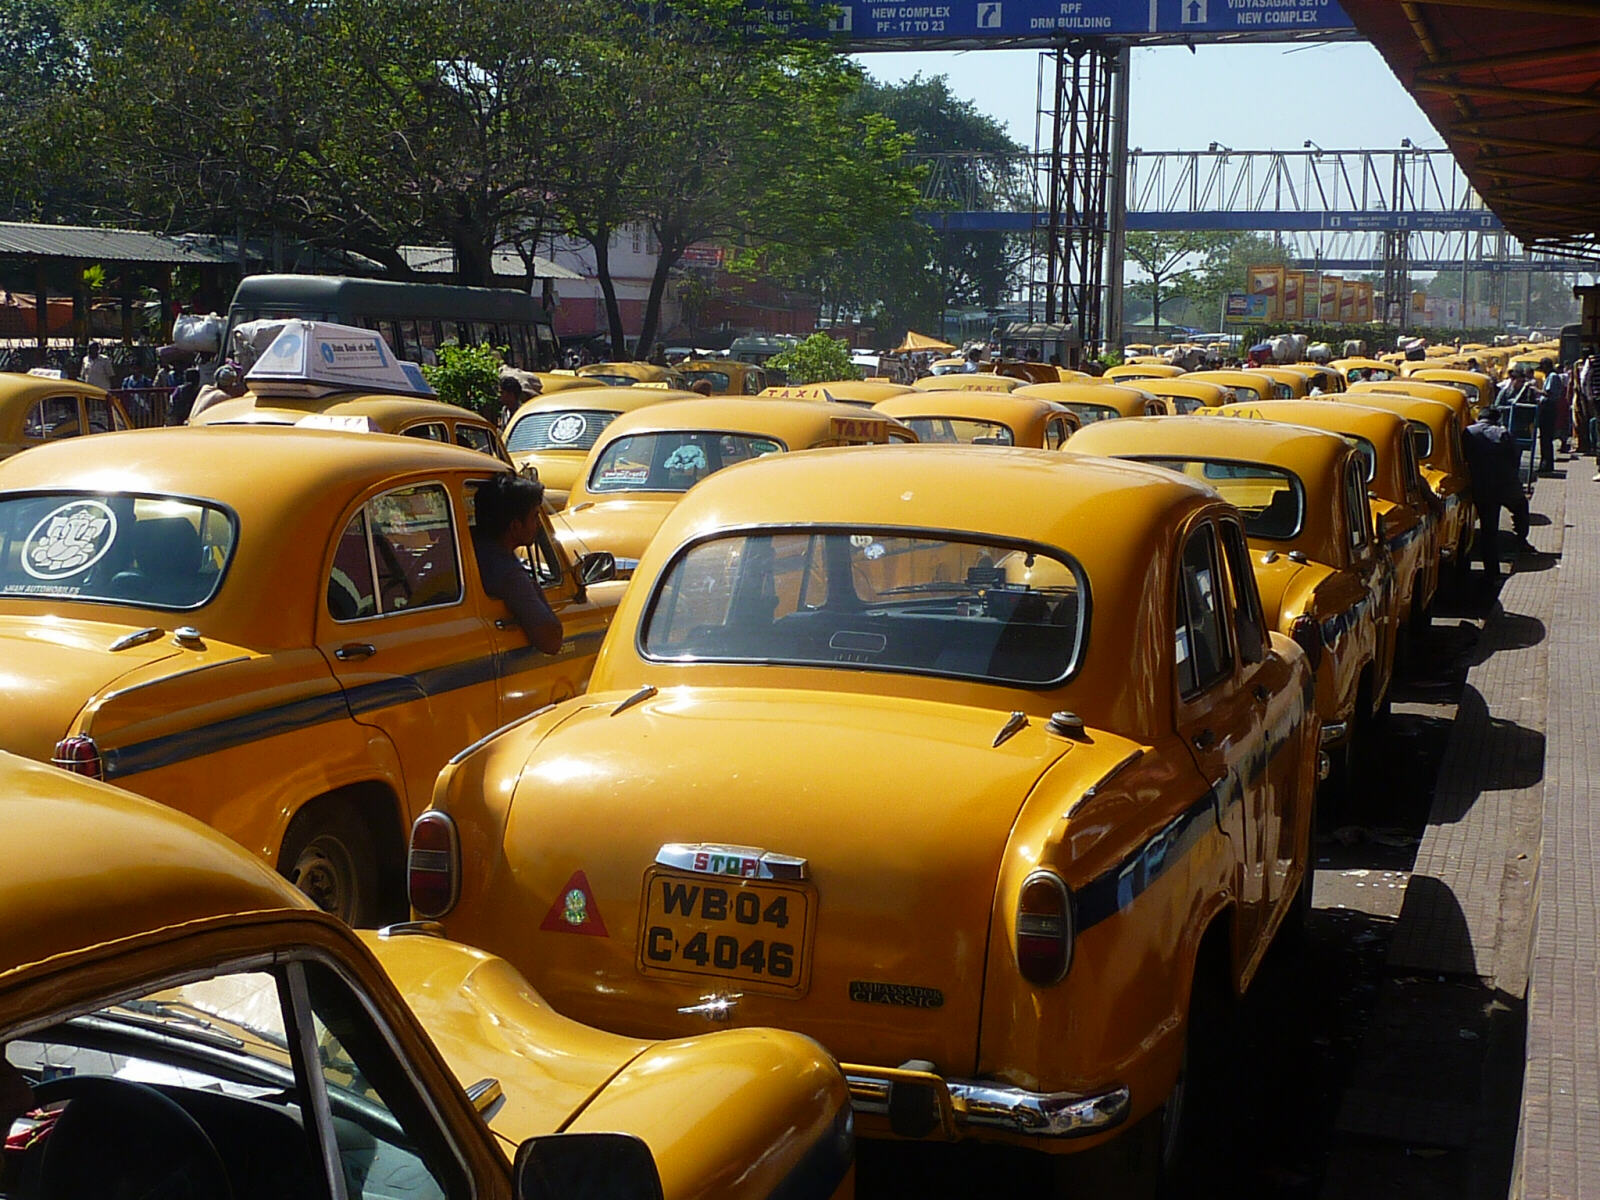 Plenty of Ambassador taxis at Howrah station, Calcutta